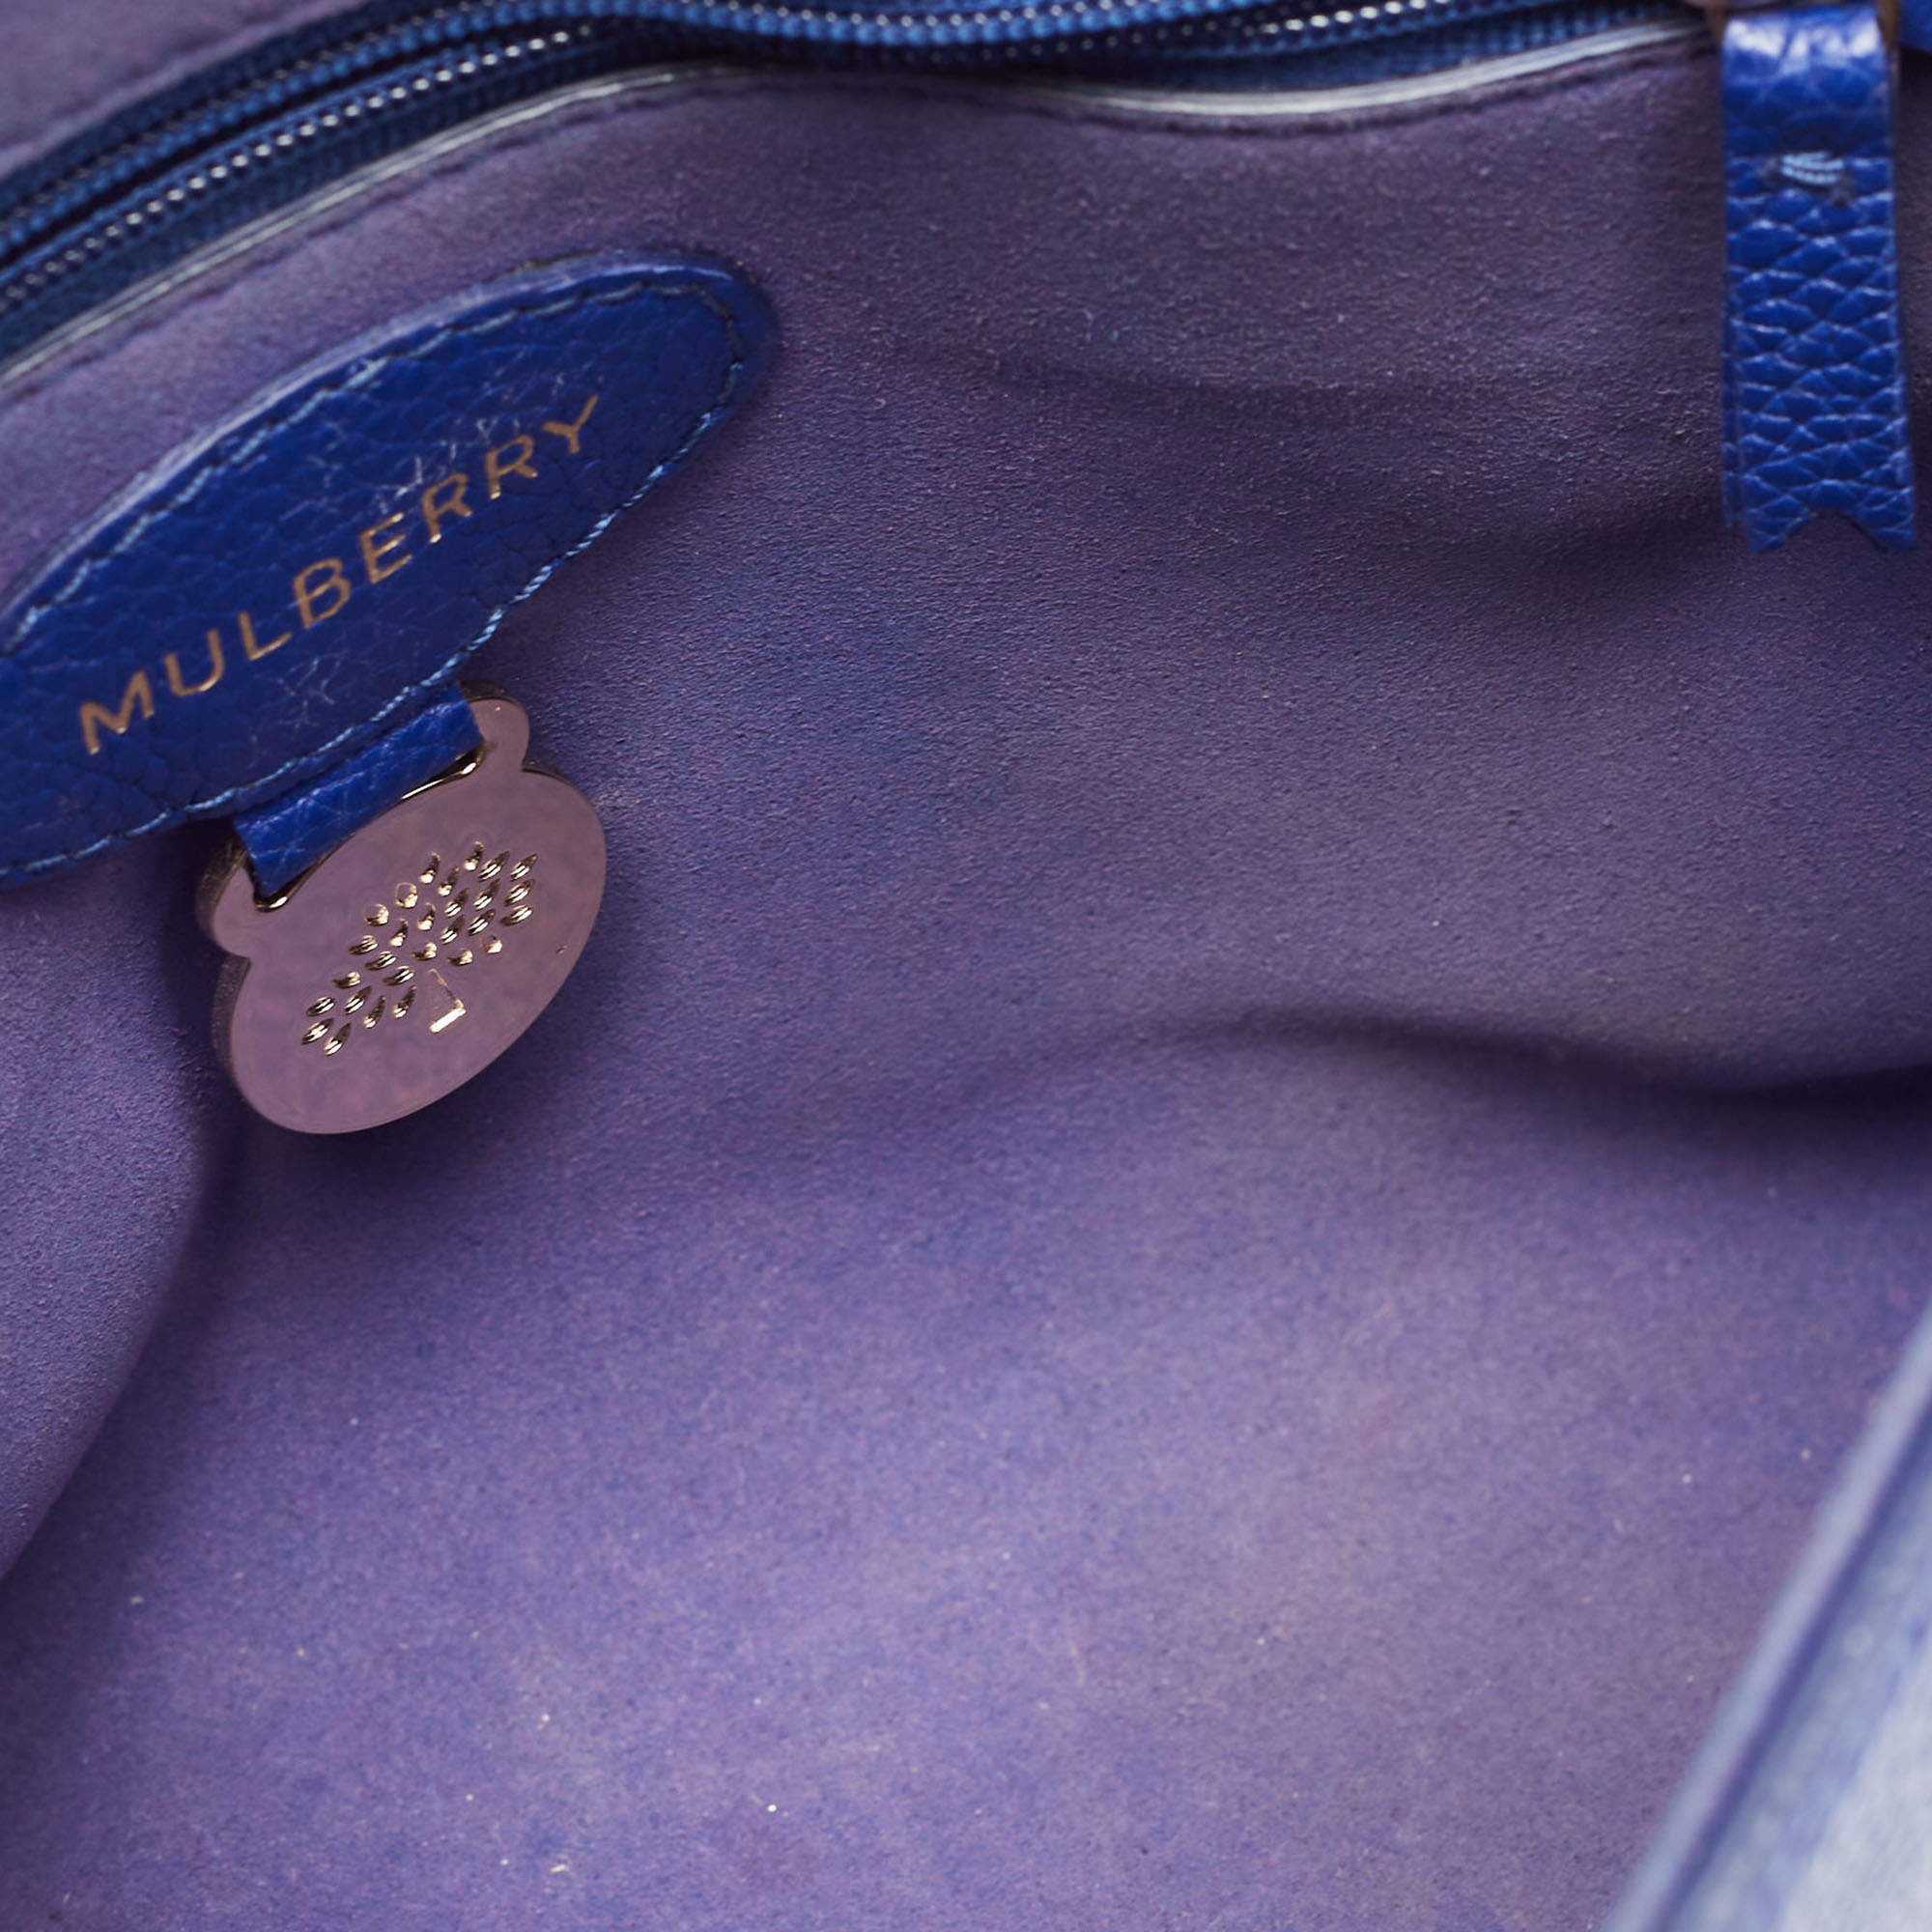 MULBERRY Blue Grain Leather Darley Shoulder Crossbody Bag Made in England |  eBay